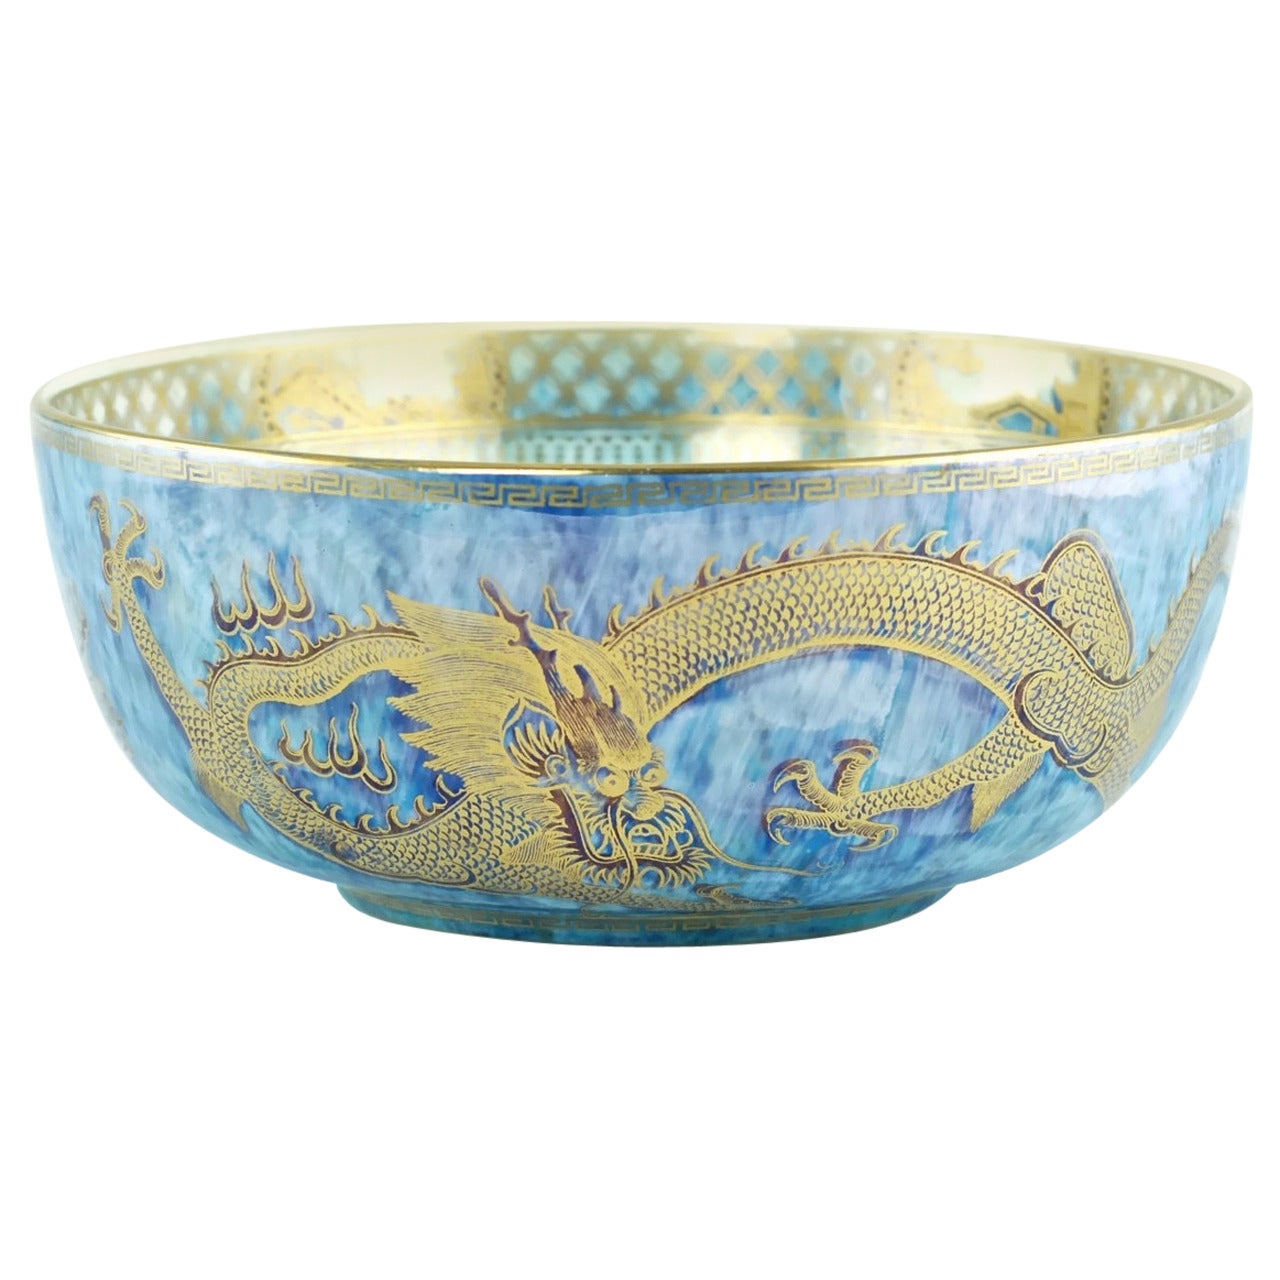 Wedgwood Fairyland Lustre 'Celestial Dragons' Centerpiece Bowl